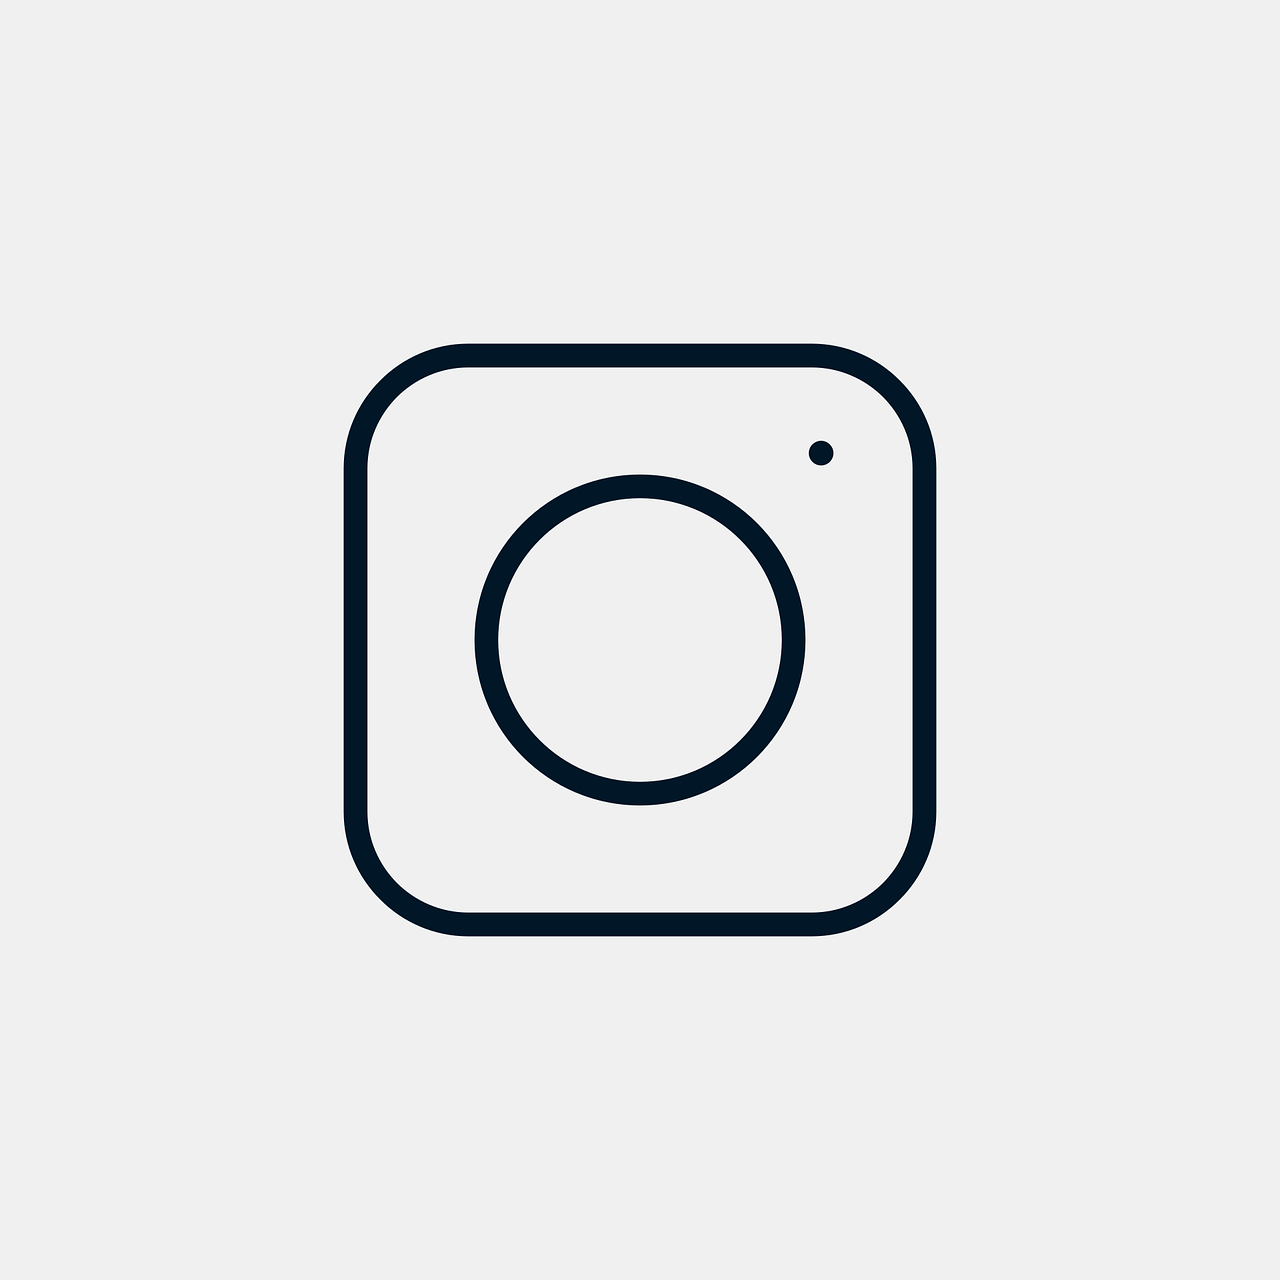 Download free photo of Instagram,insta,instagram logo,instagram icon ...